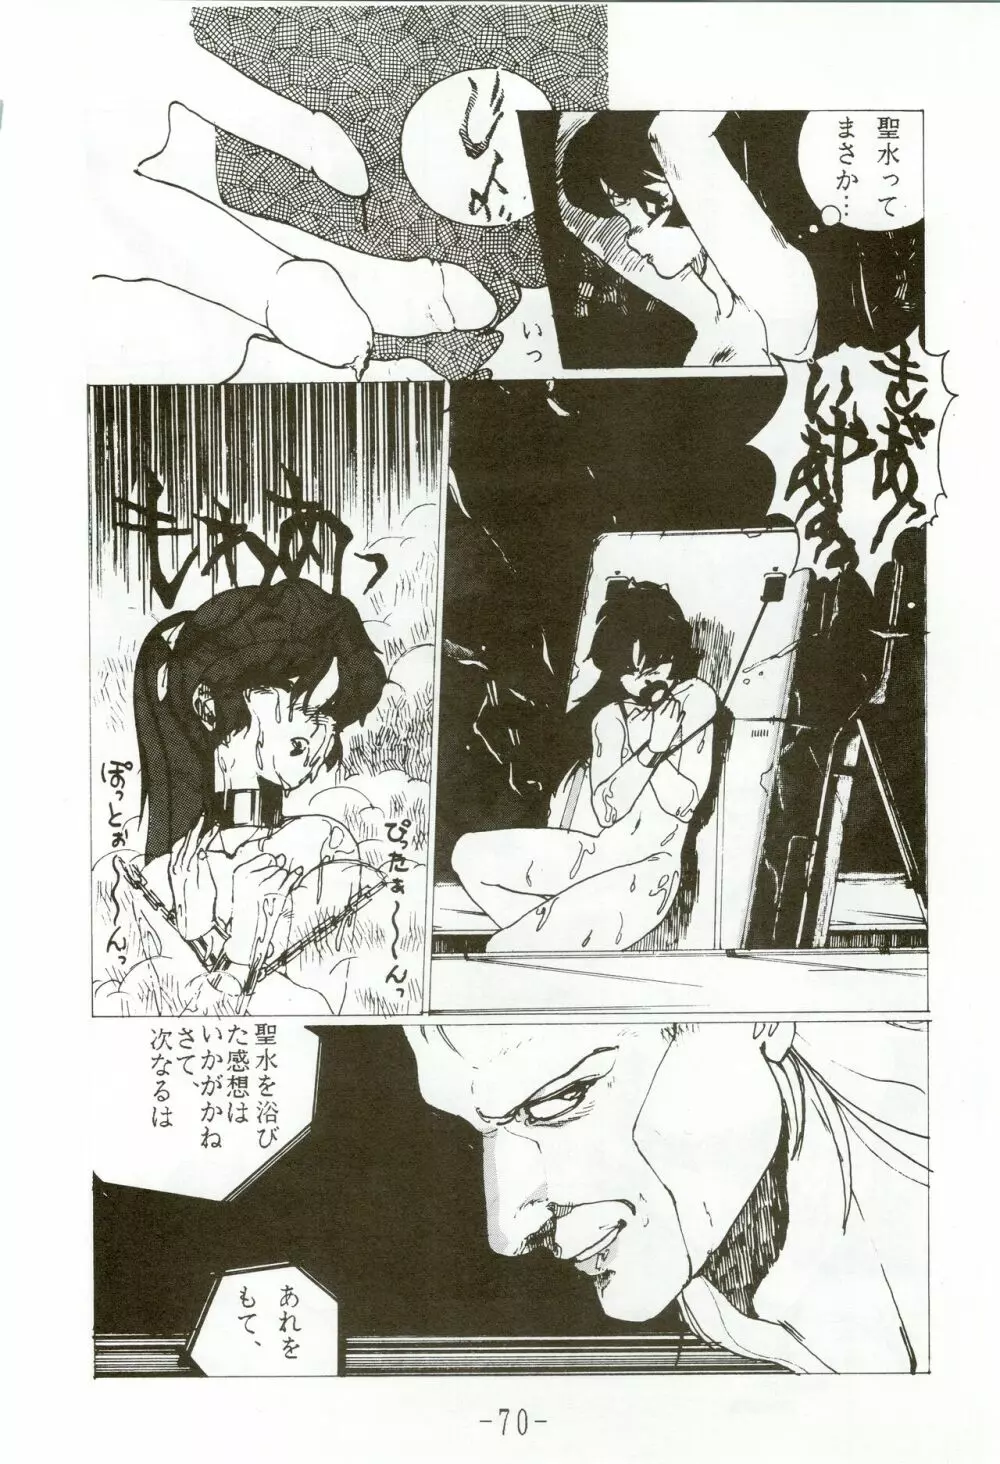 甲冑伝説 - page70